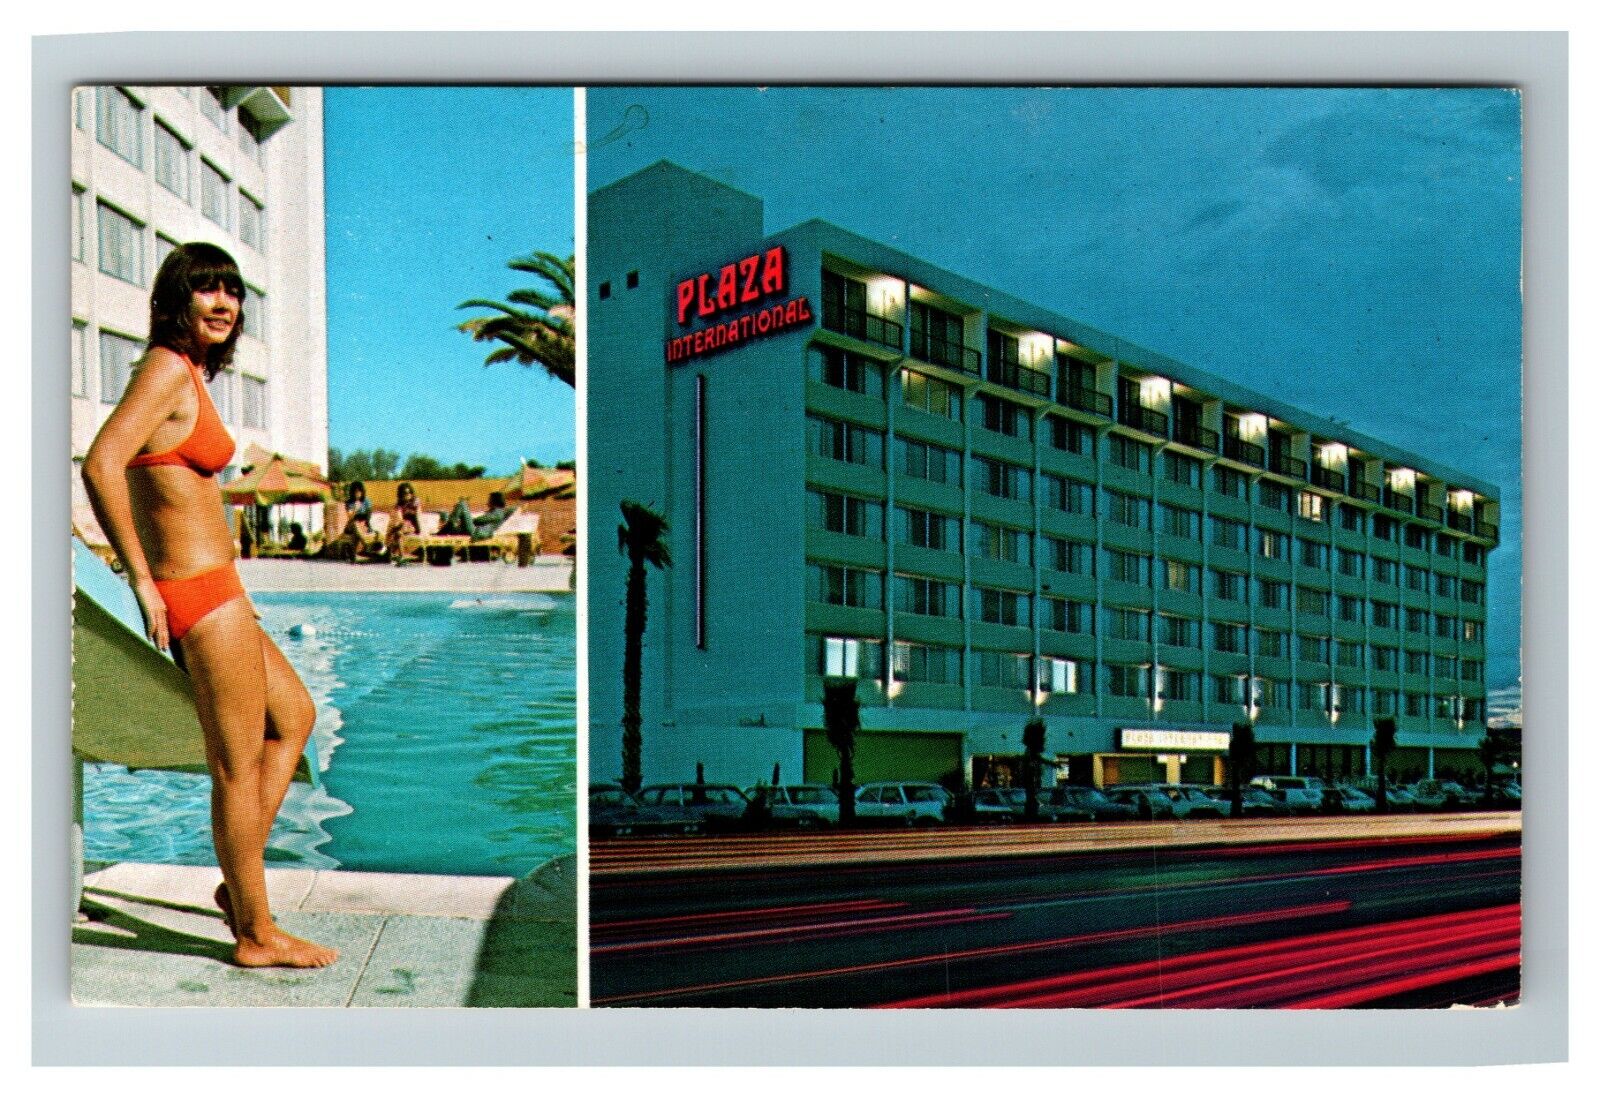 Plaza International Hotel, Tuscon AZ c1960 Vintage Postcard